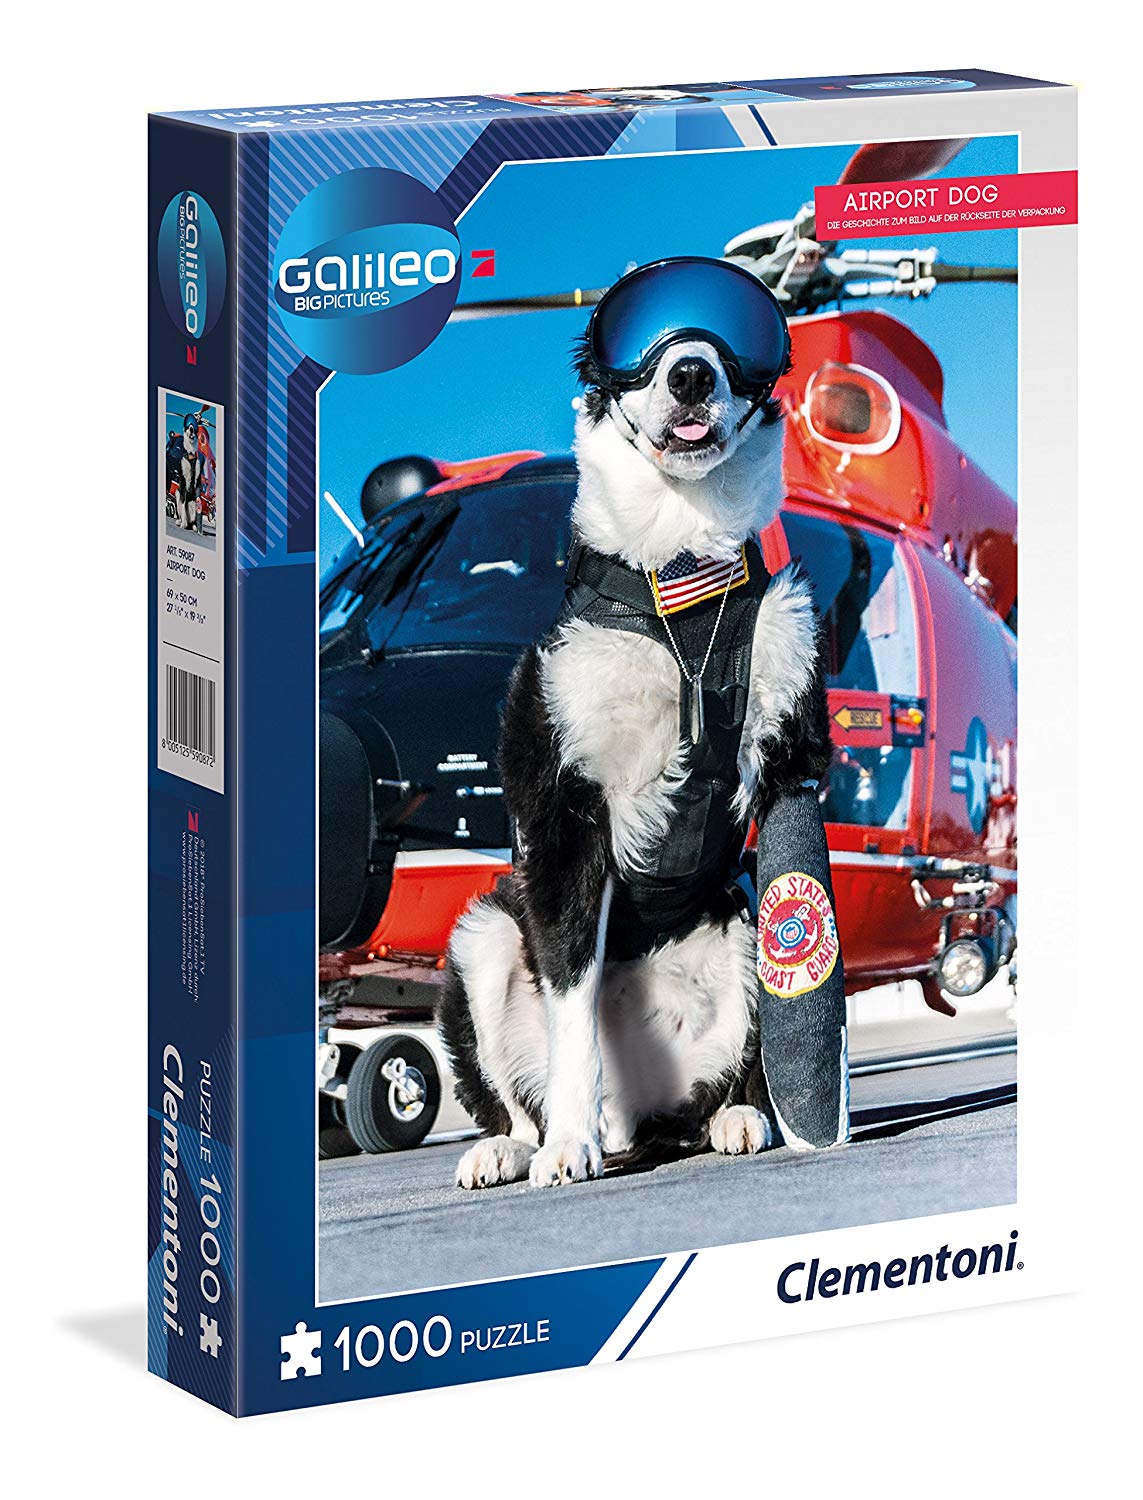 Clementoni Airport Dog Puzzle T Galileo